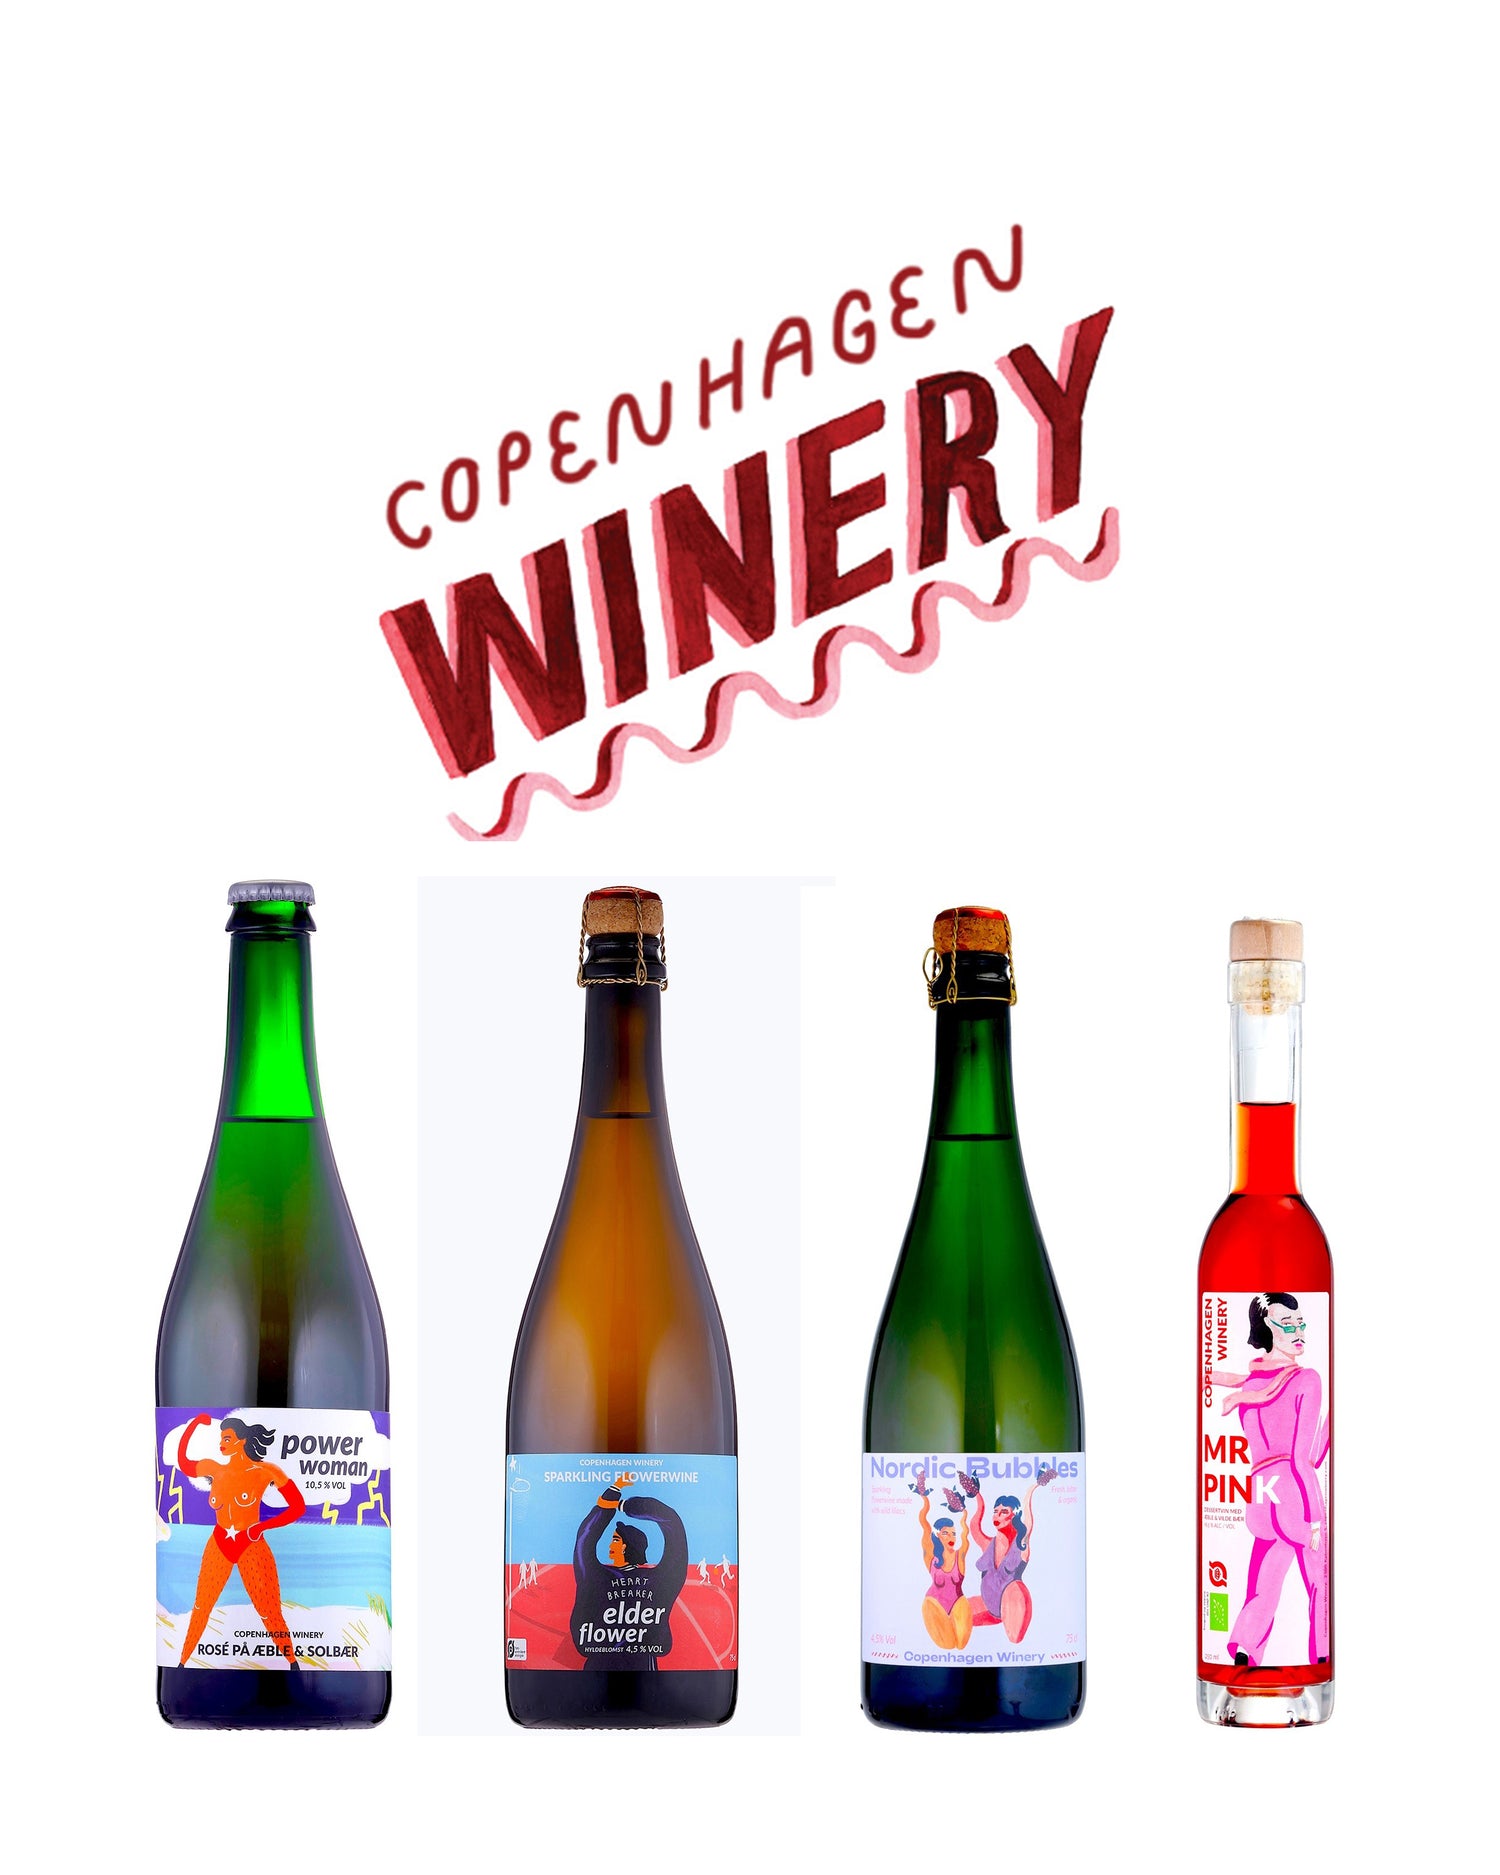 Copenhagen Winery